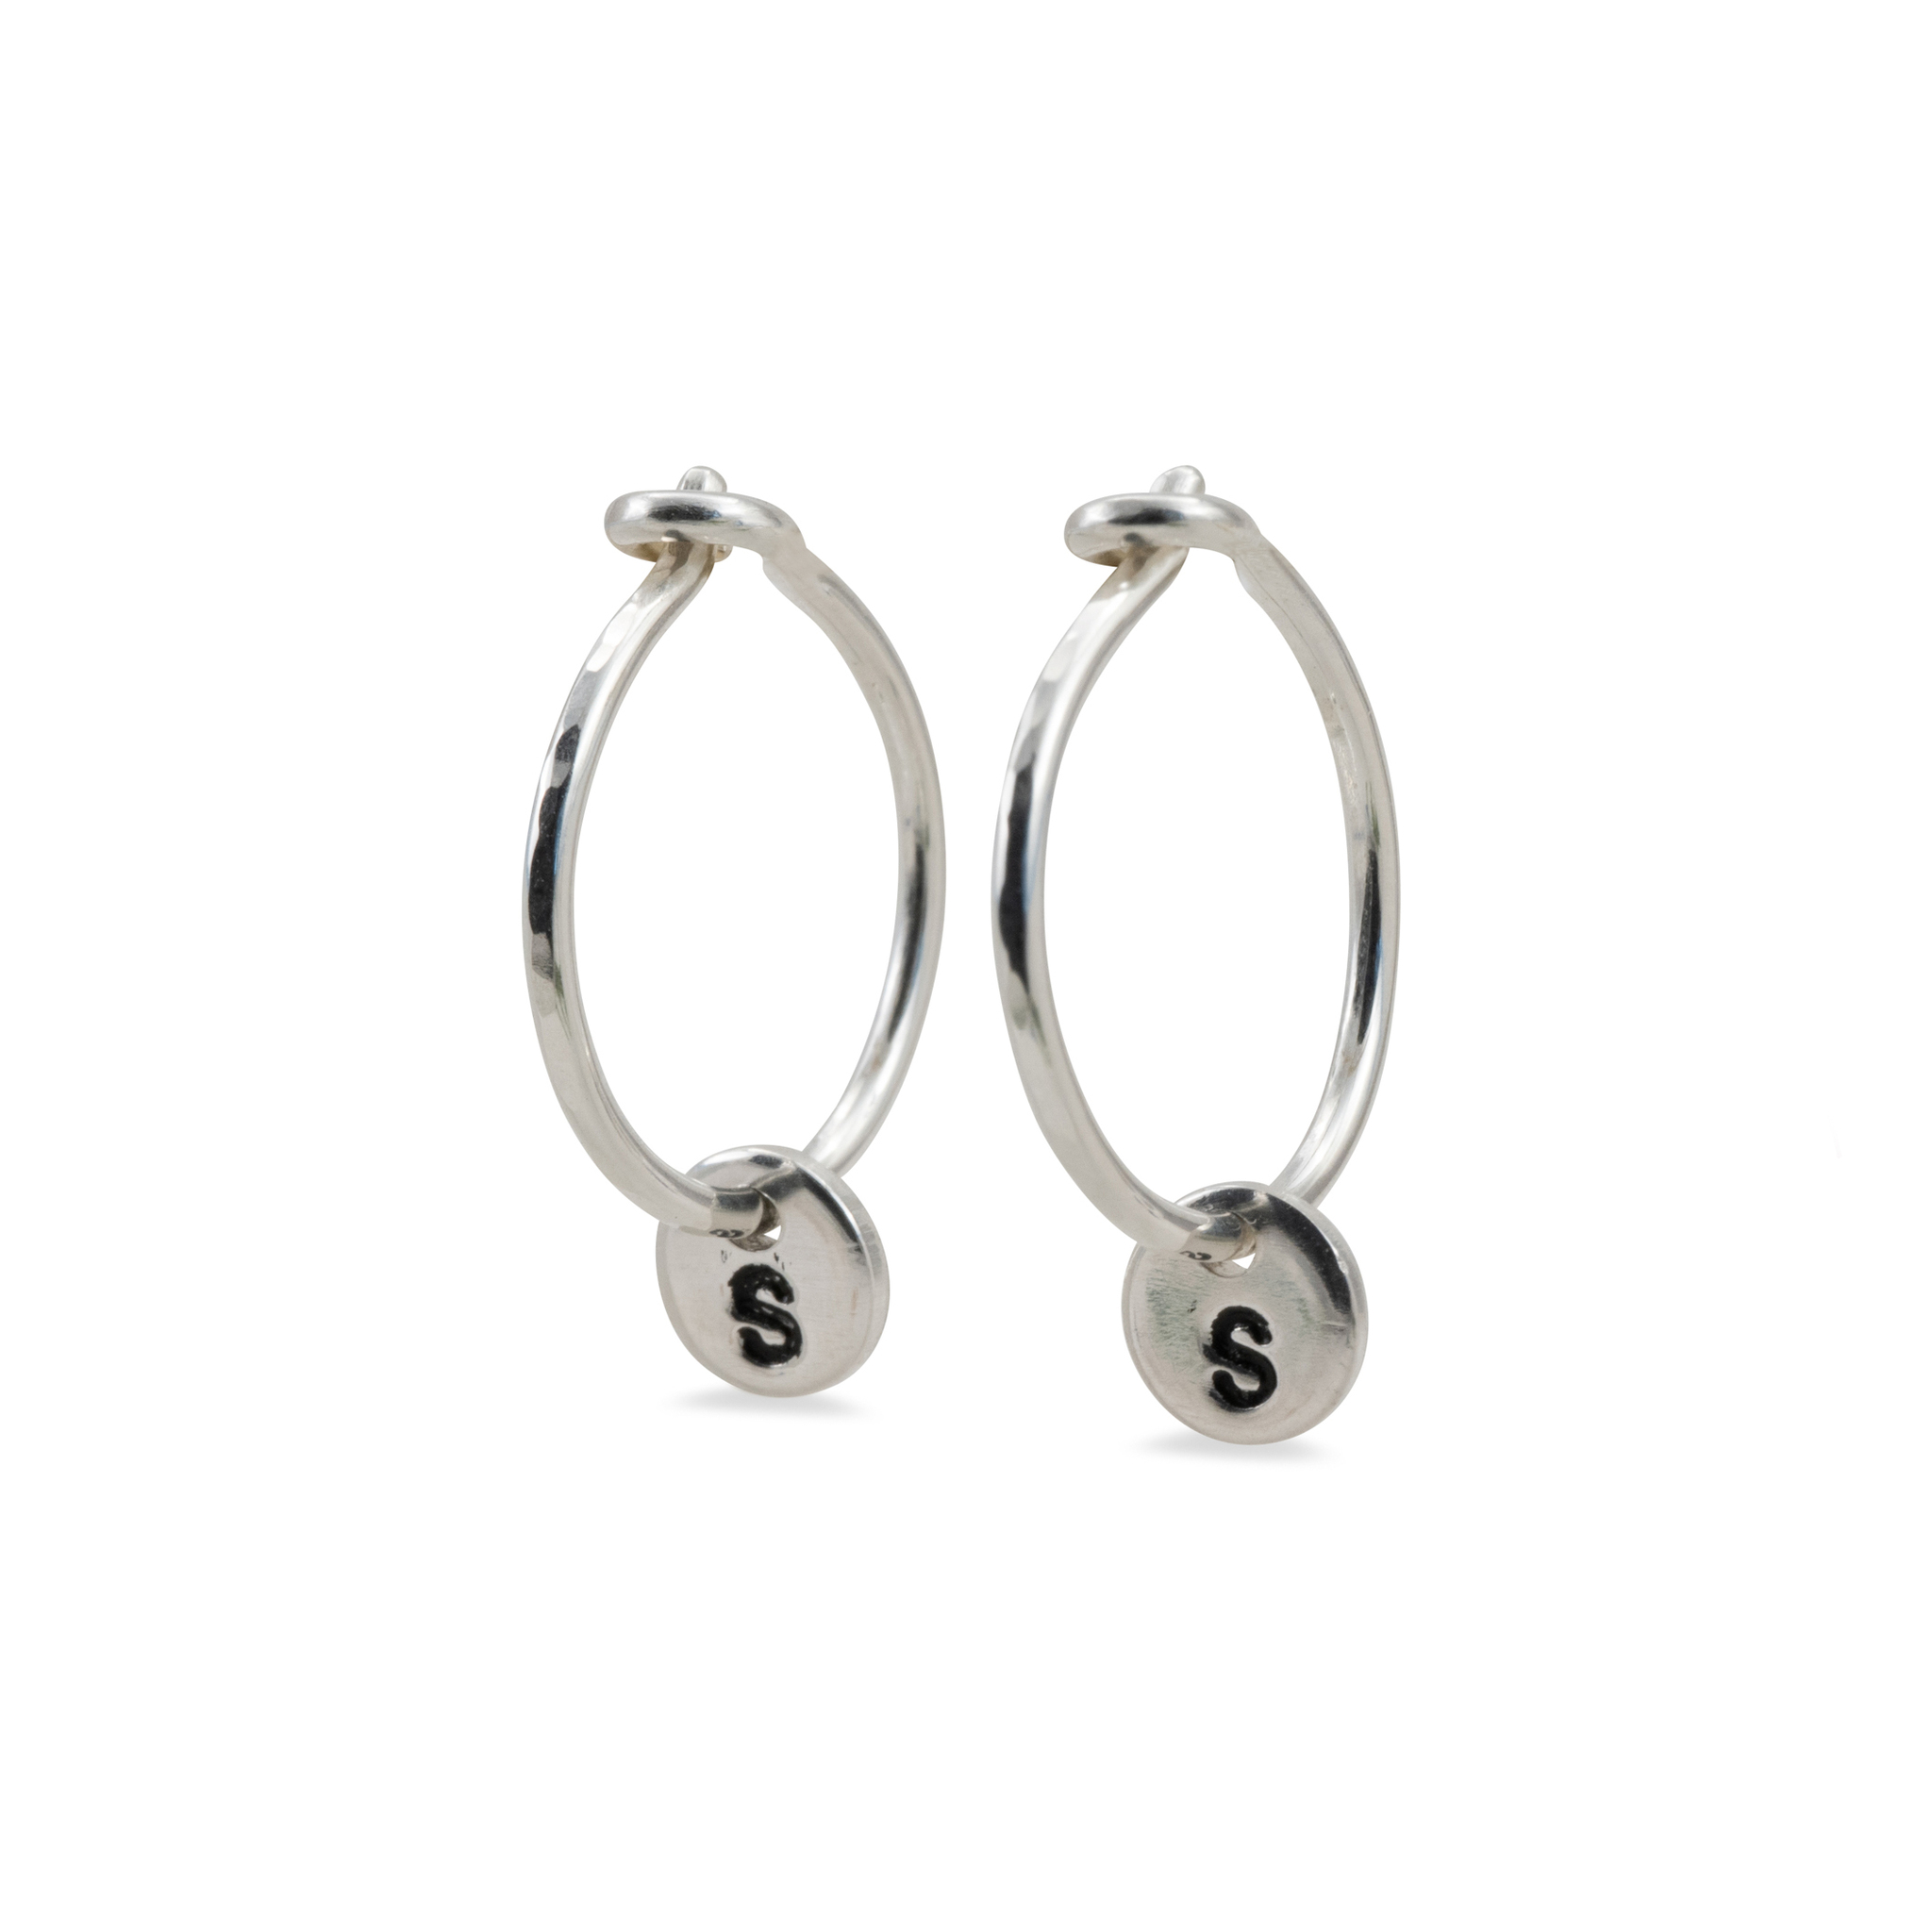 Handmade Hoops Earrings Name Jewelry Recycled Silver